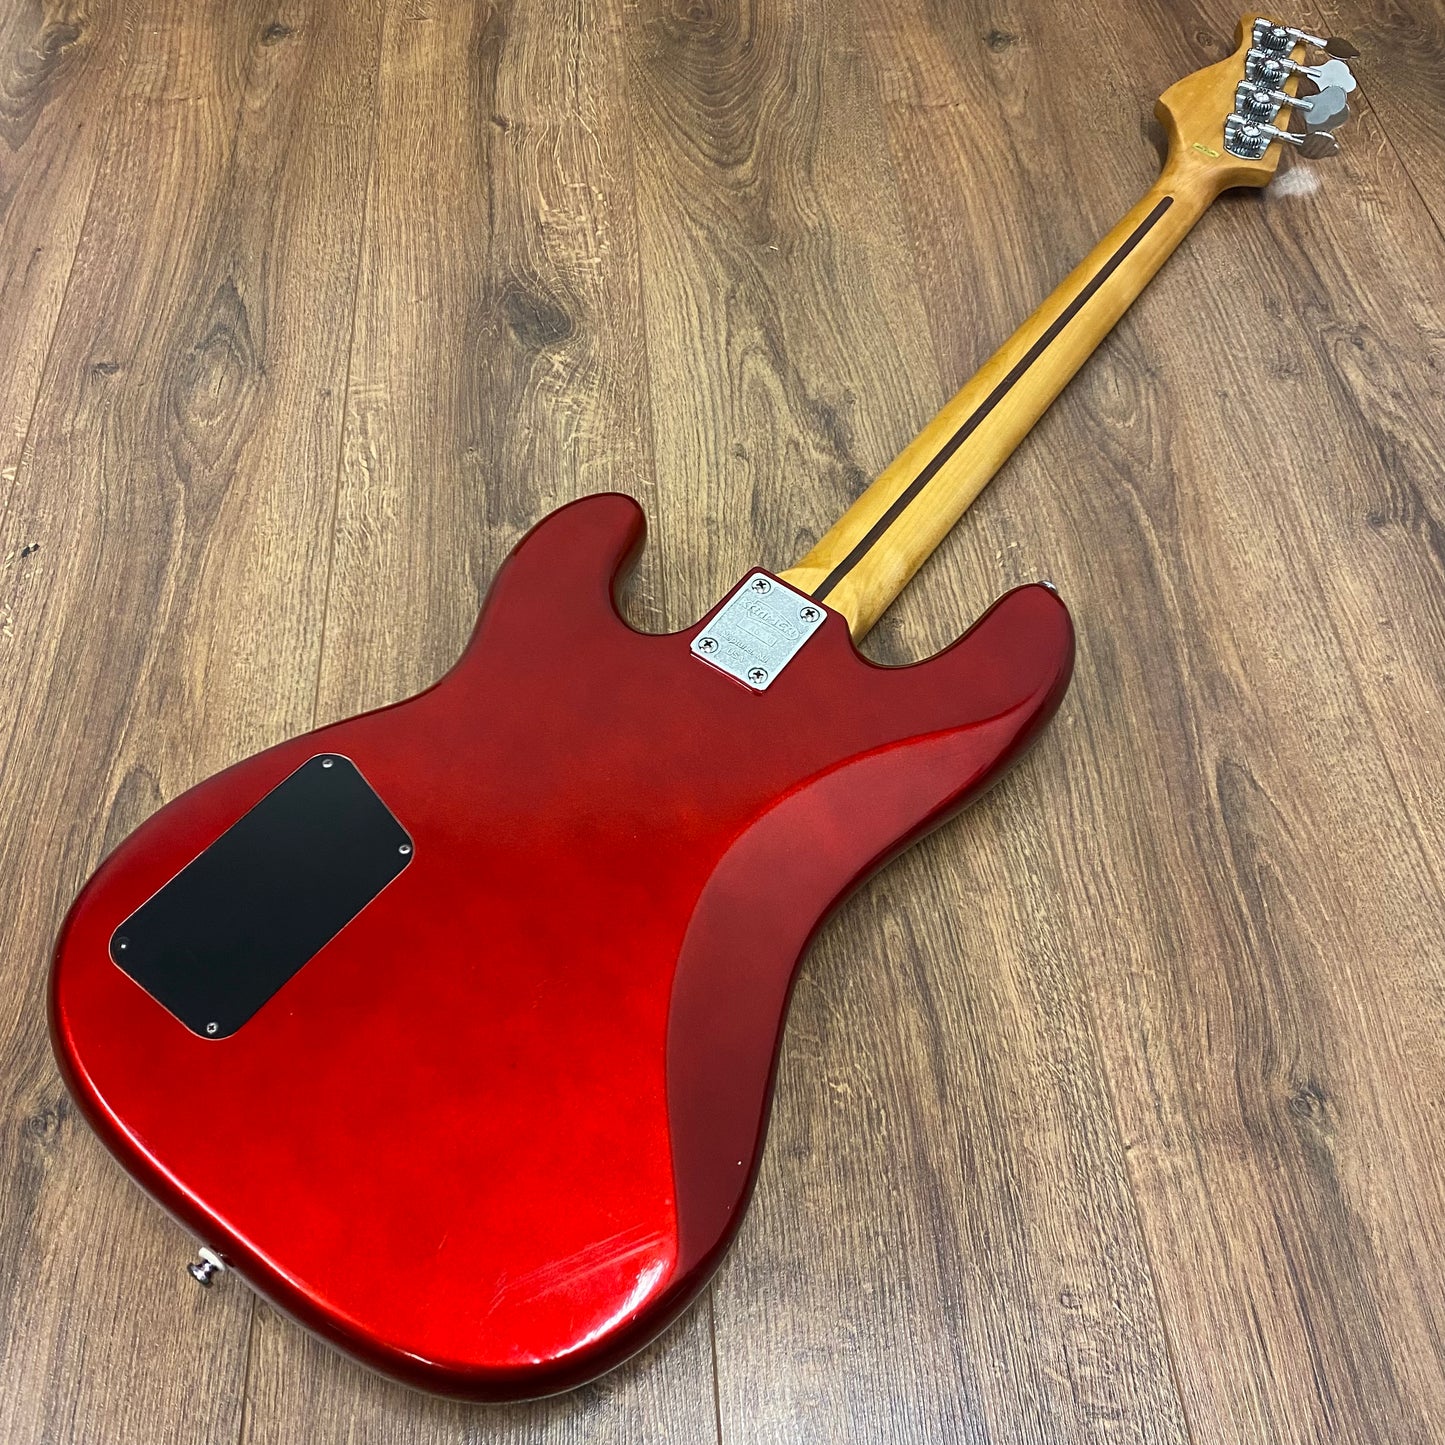 Pre-Owned Kramer Striker 700 ST Bass - Candy Apple Red - 1980's